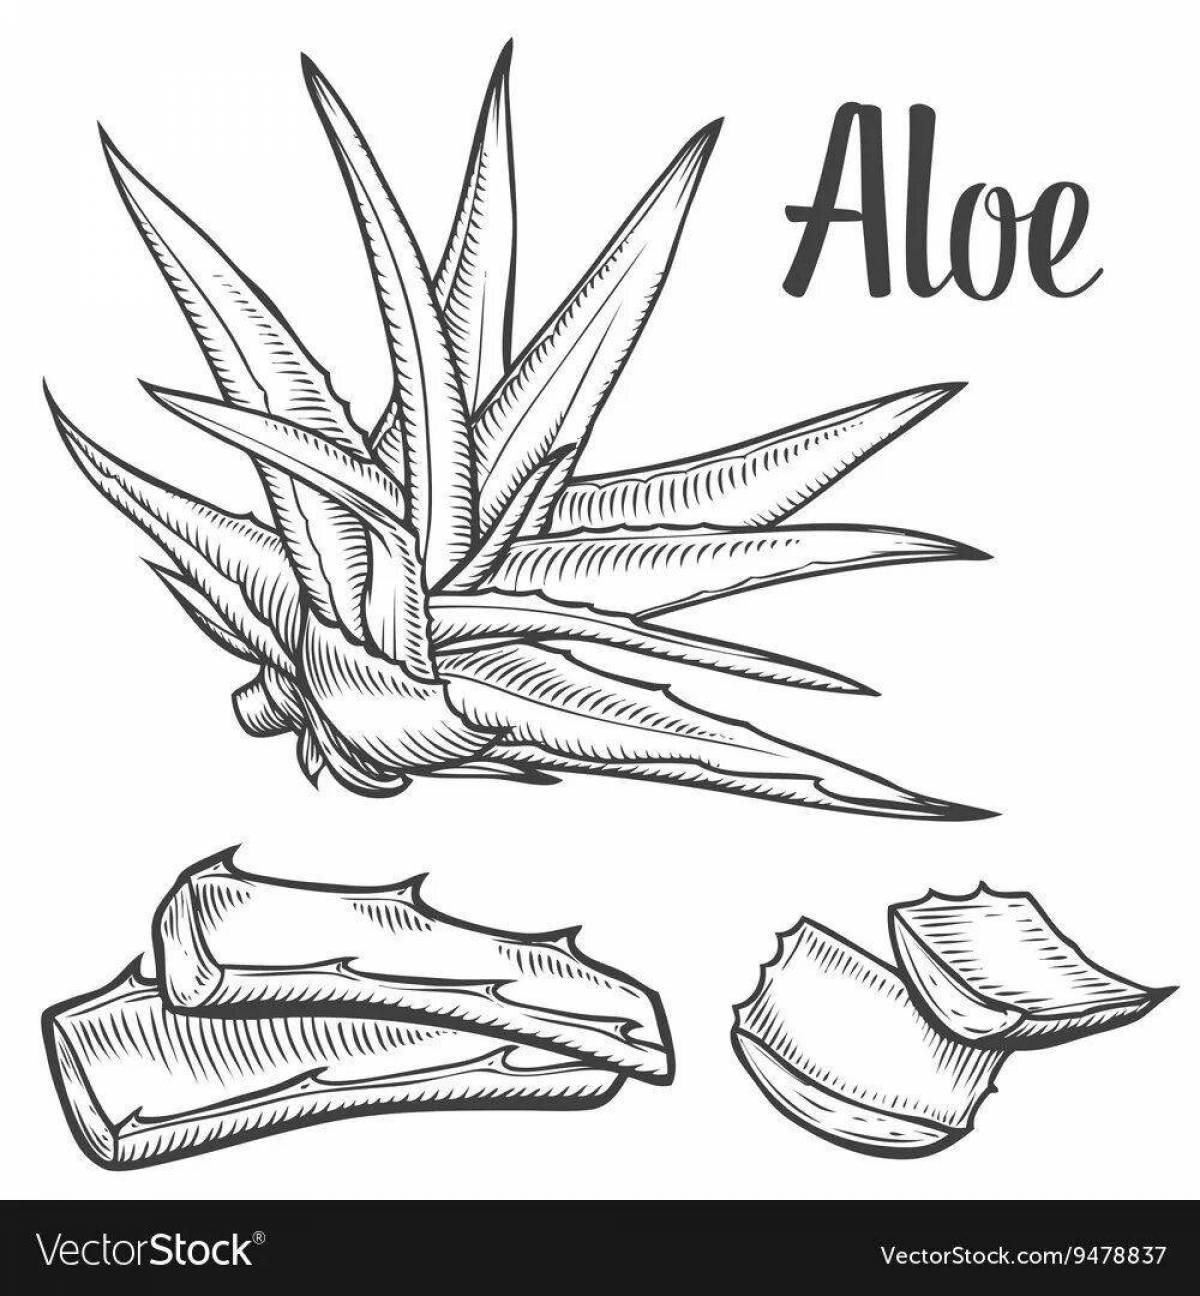 Joyful aloe coloring page